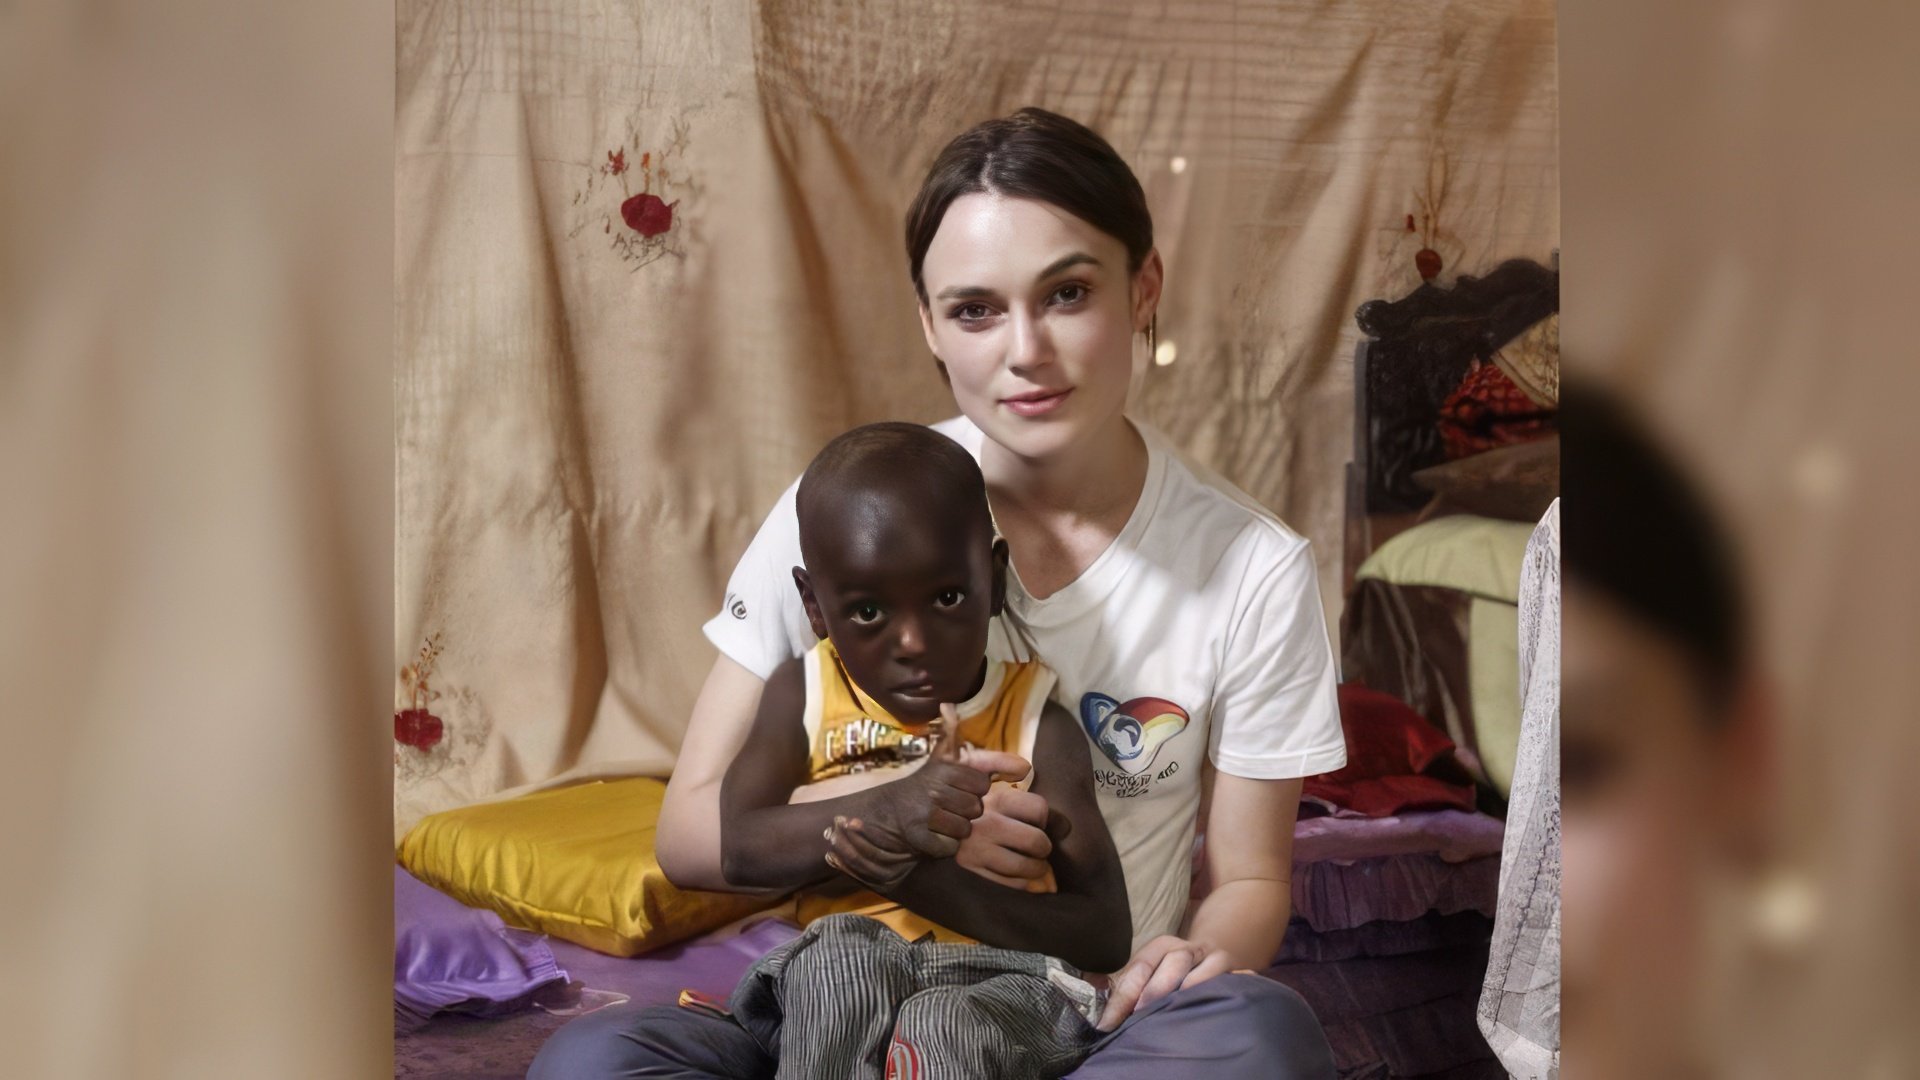 Keira Knightley is a UNICEF Goodwill Ambassador